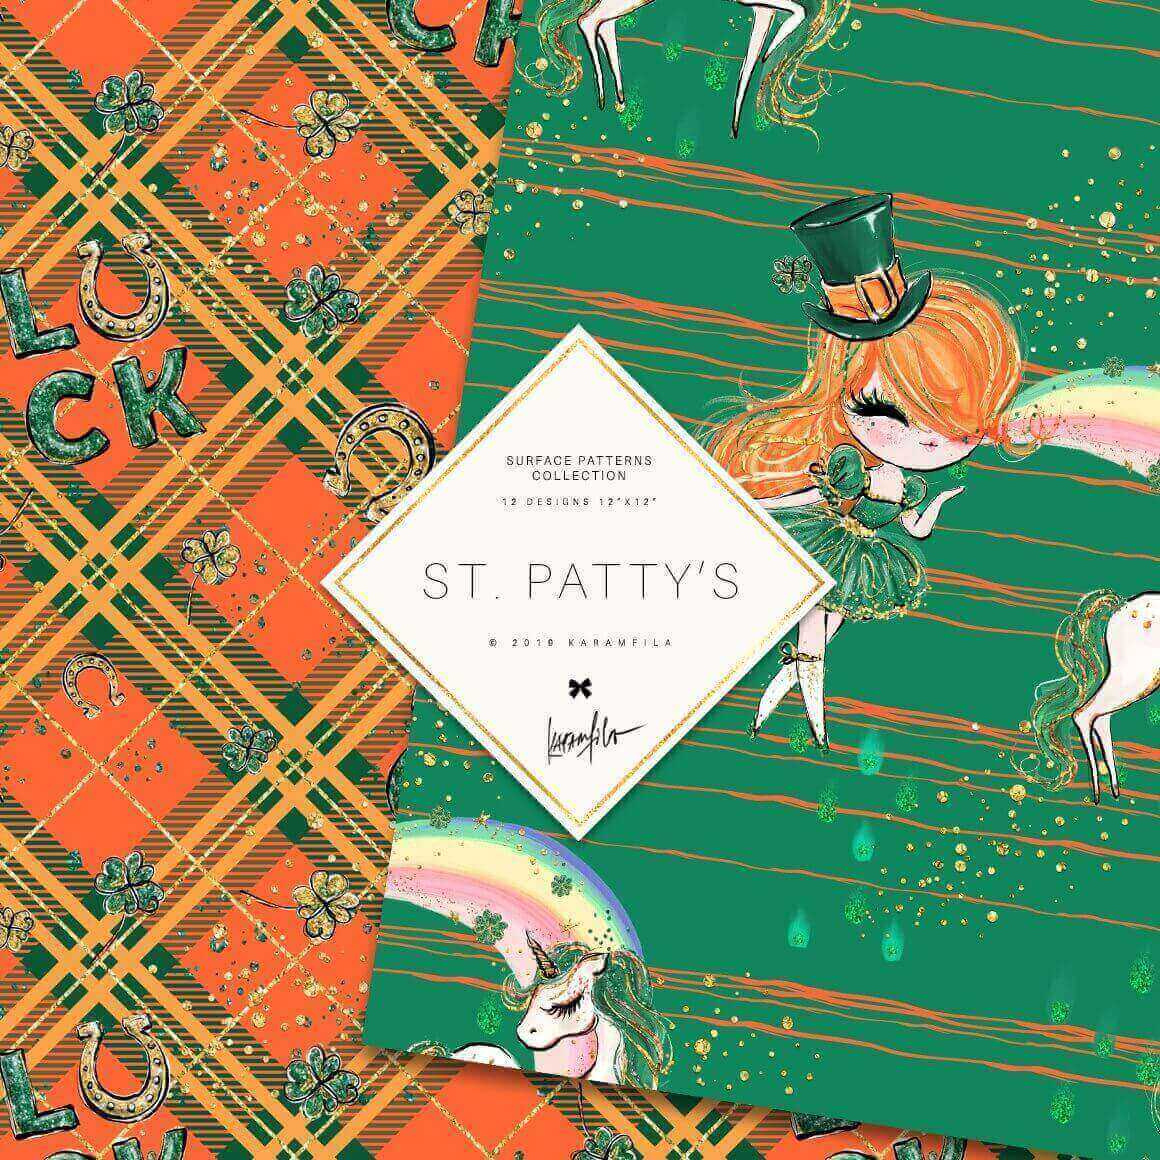 St. Patty's on Orange Background.